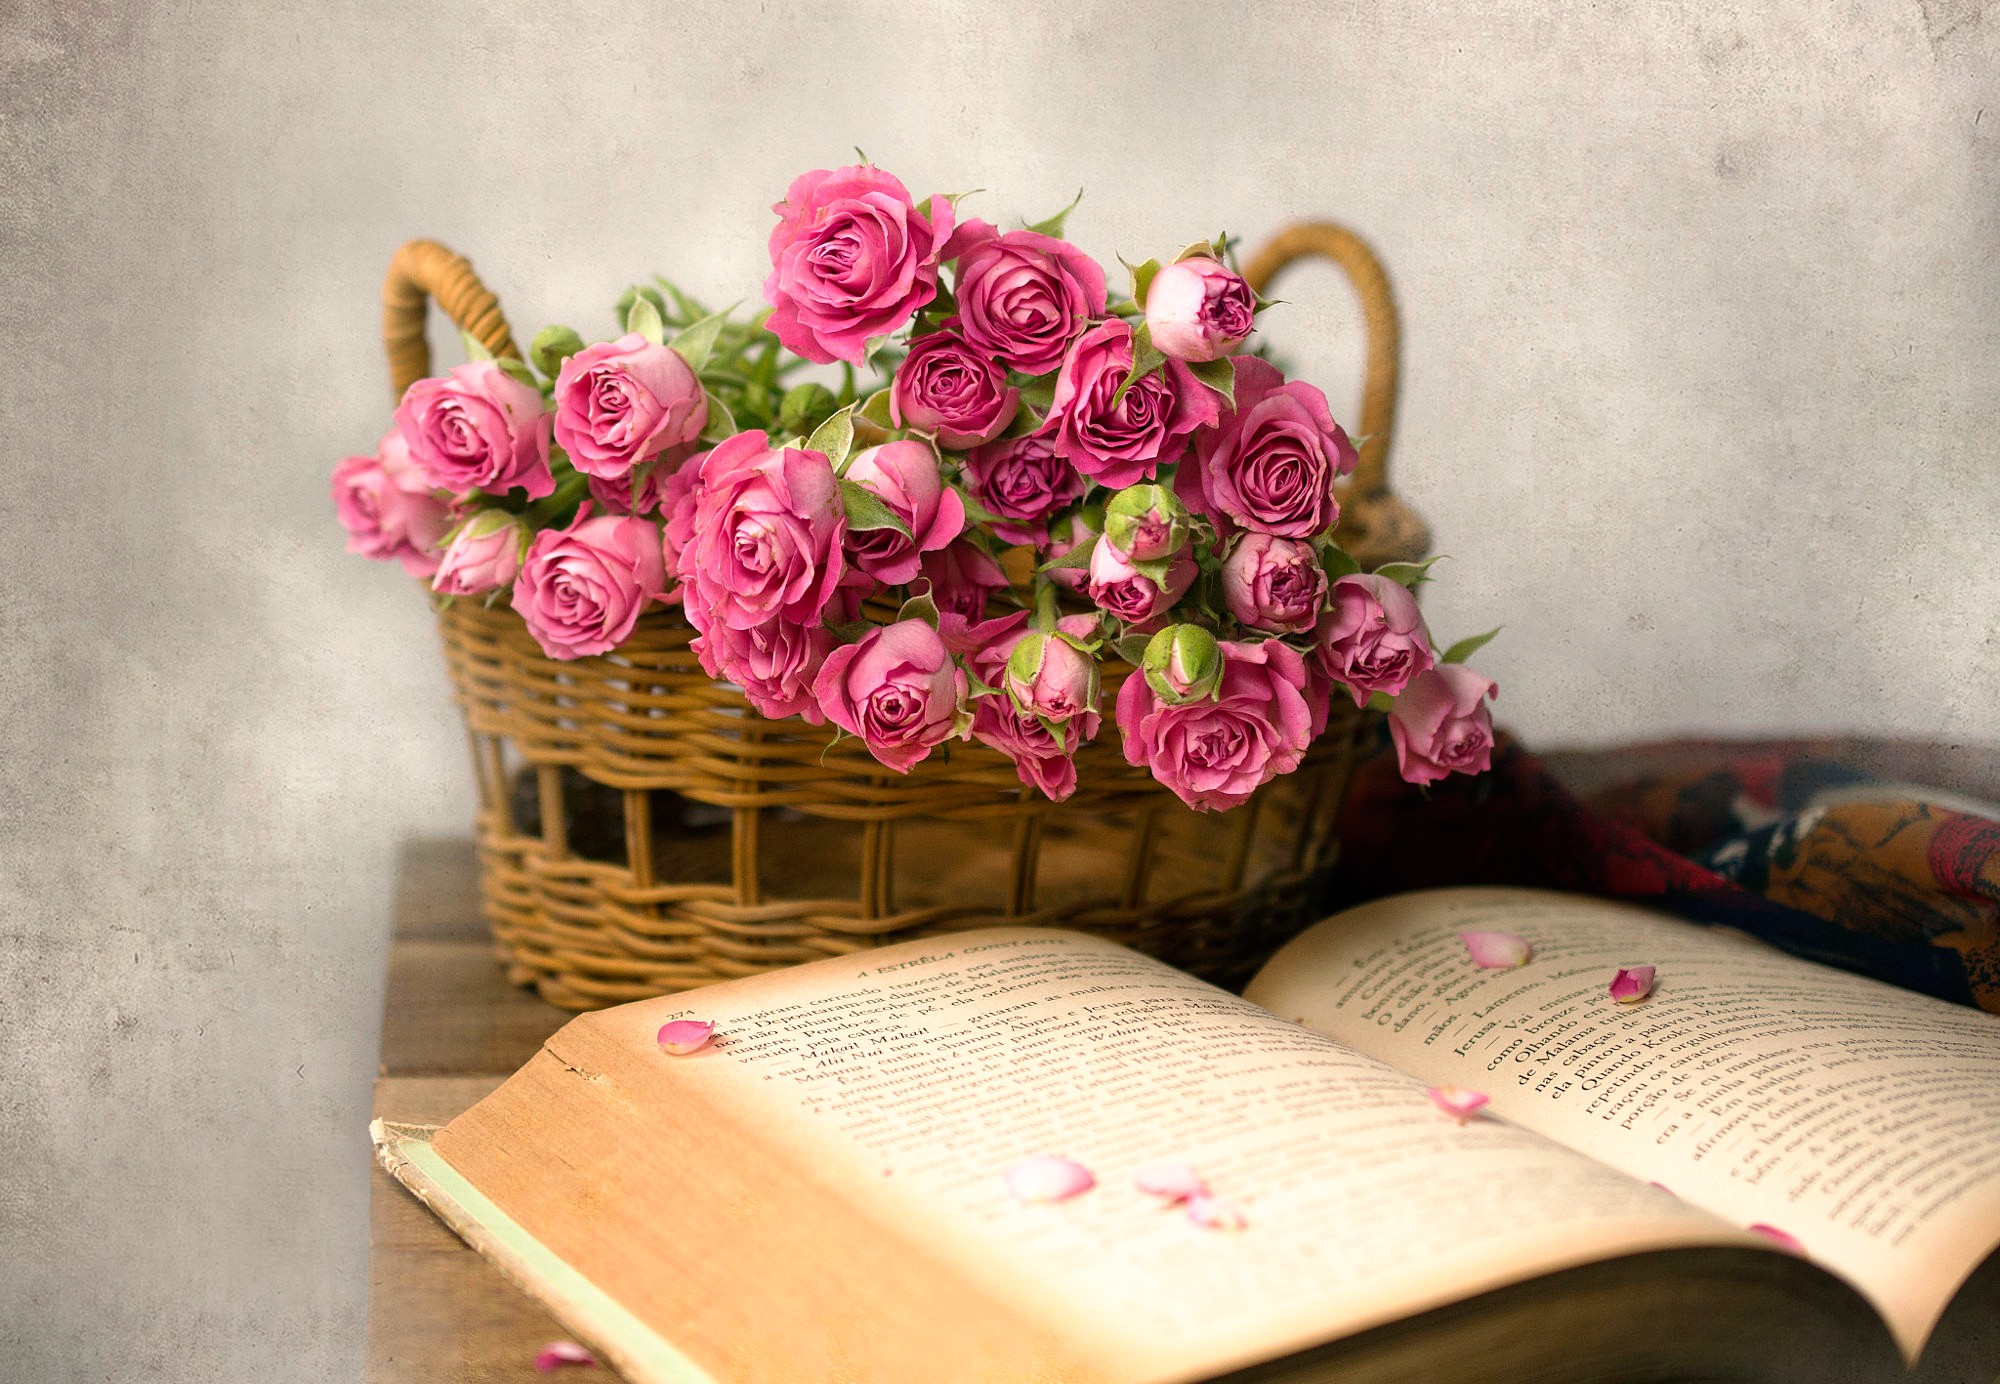 General 2000x1384 rose flowers books baskets pink flowers still life